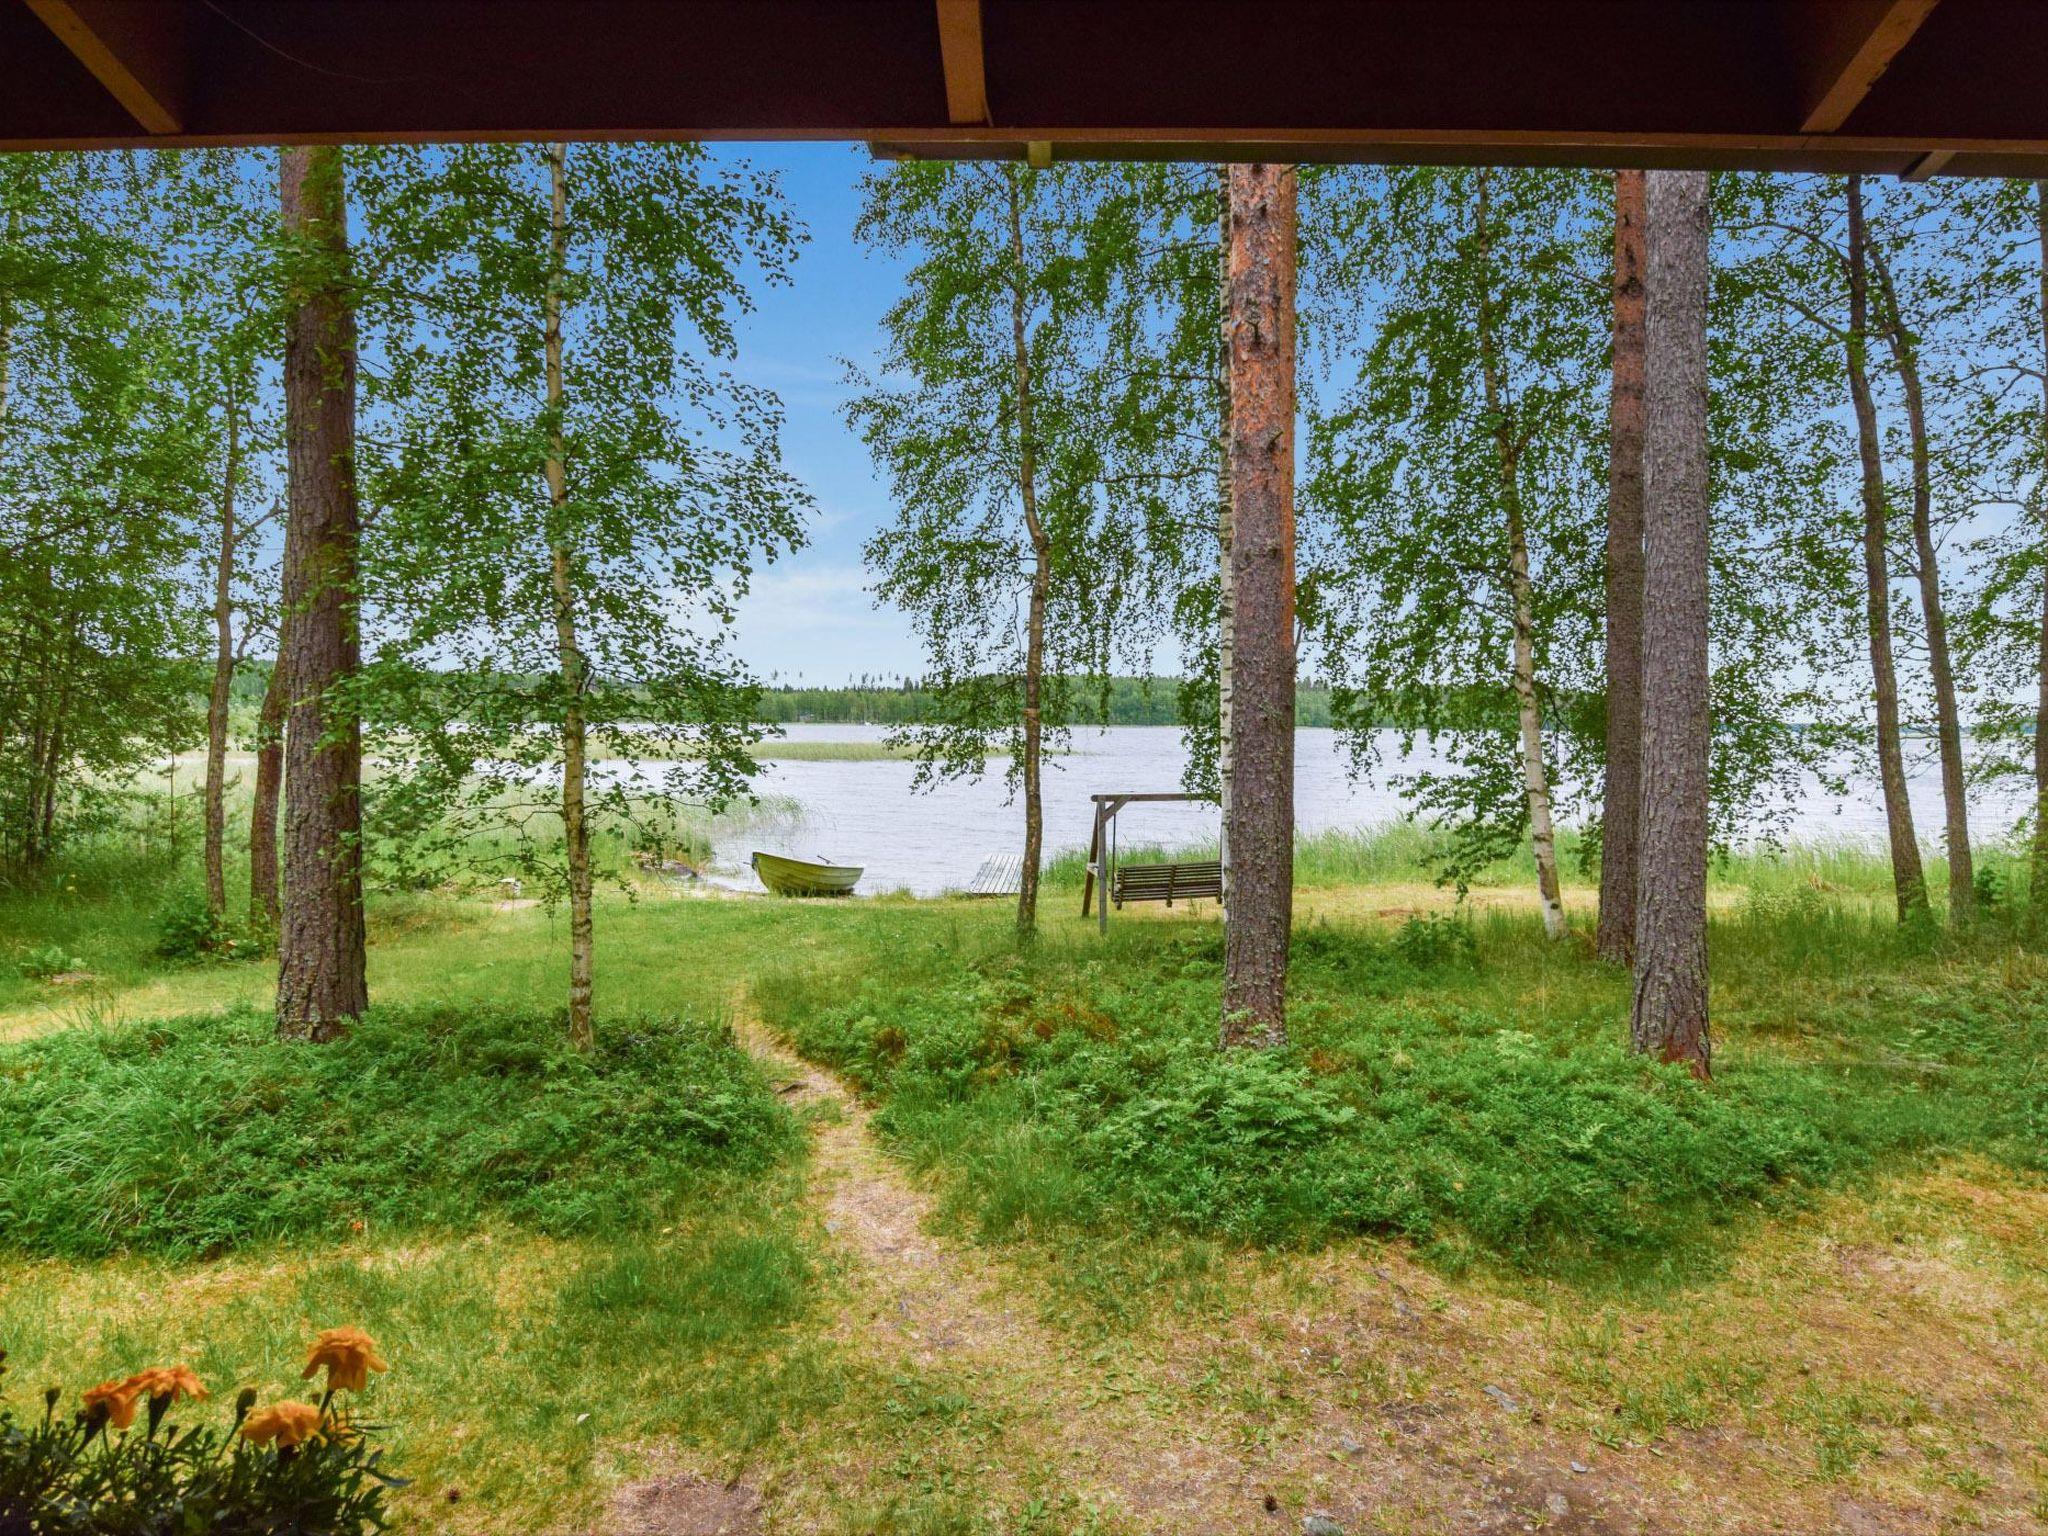 Photo 5 - 2 bedroom House in Savonlinna with sauna